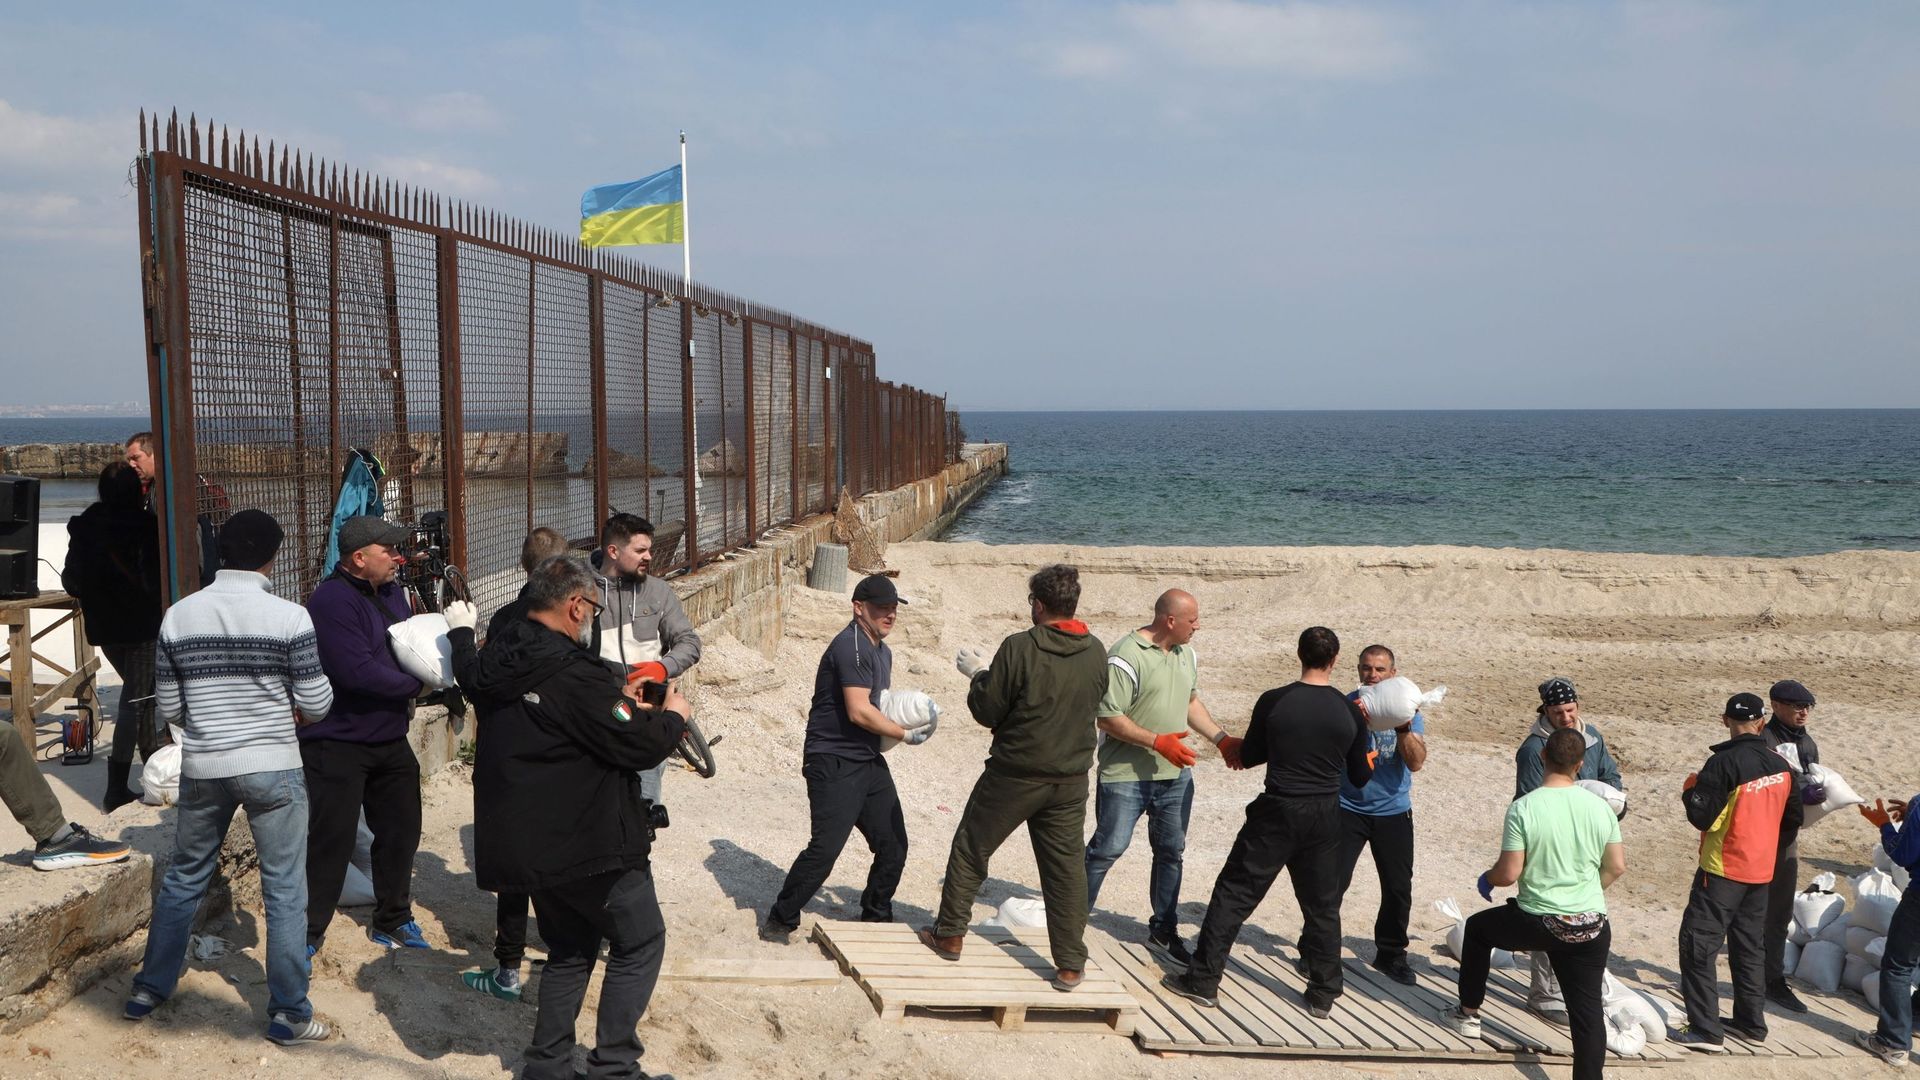 Des habitants construisent une barricade en sacs de sable